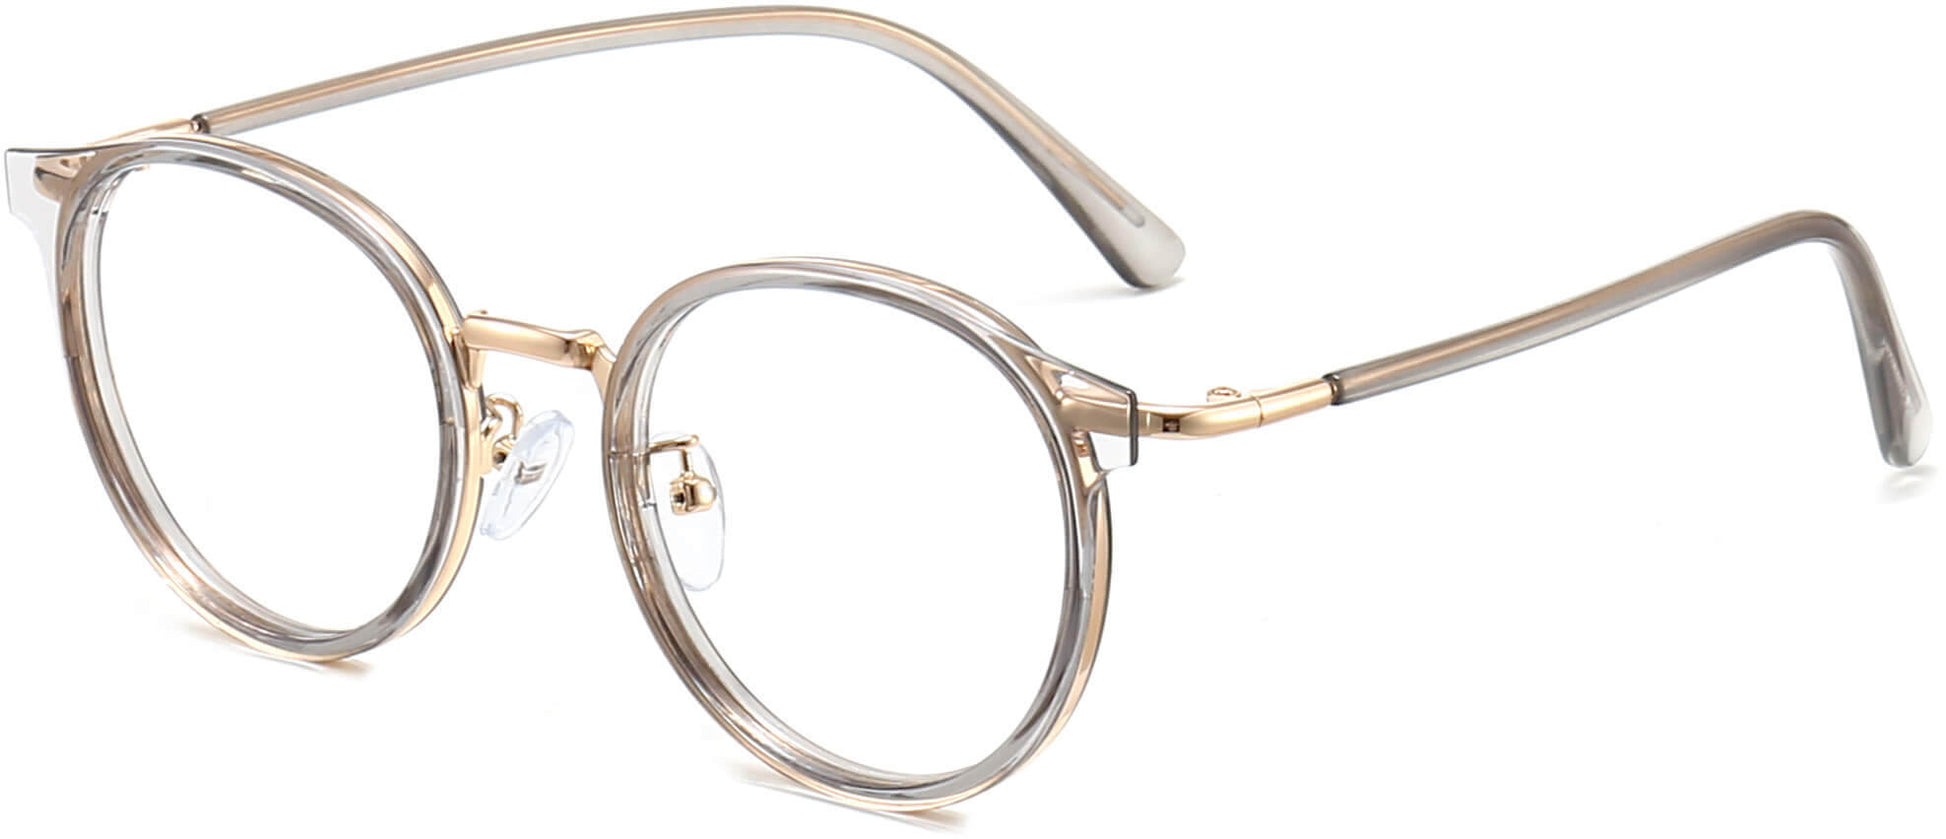 Kimberly Round Gray Eyeglasses from ANRRI, angle view